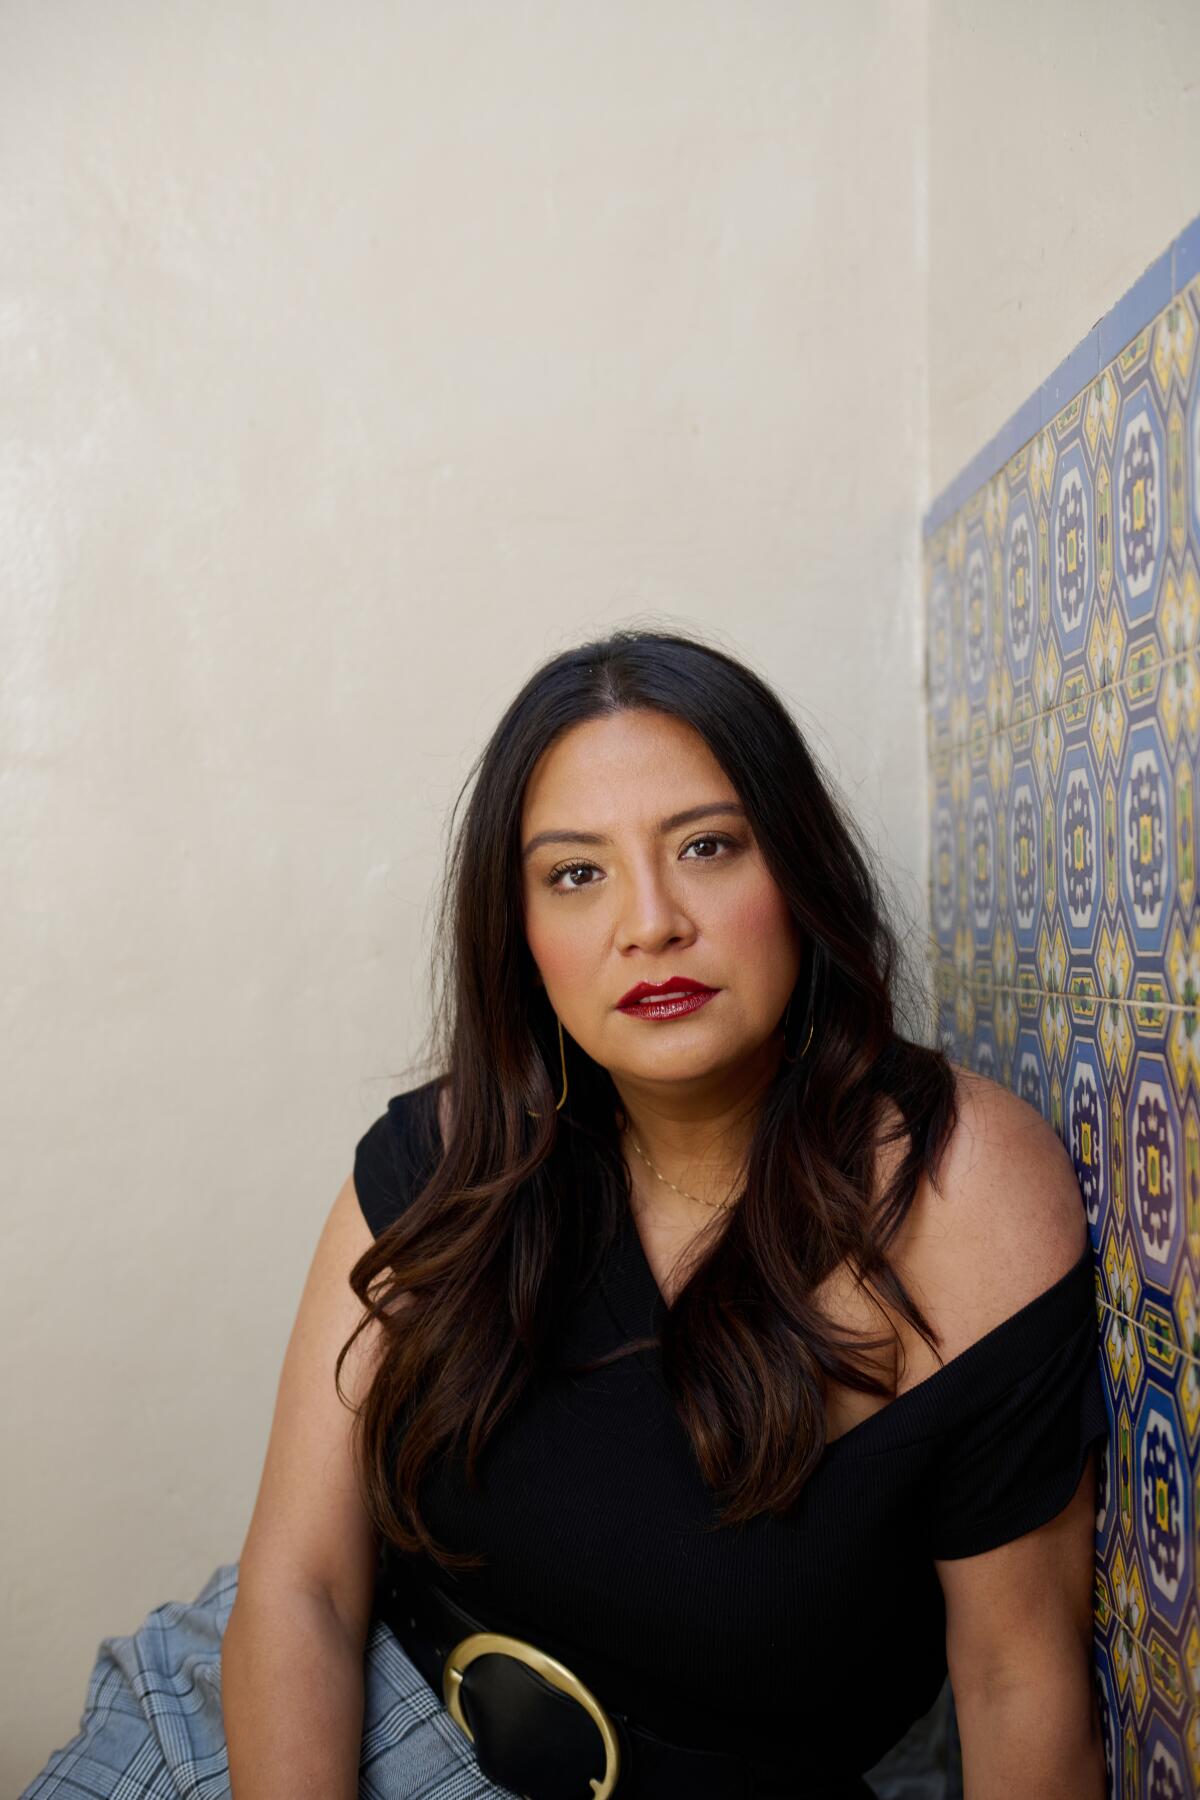 Comedian Cristela Alonzo sitting against a wall.